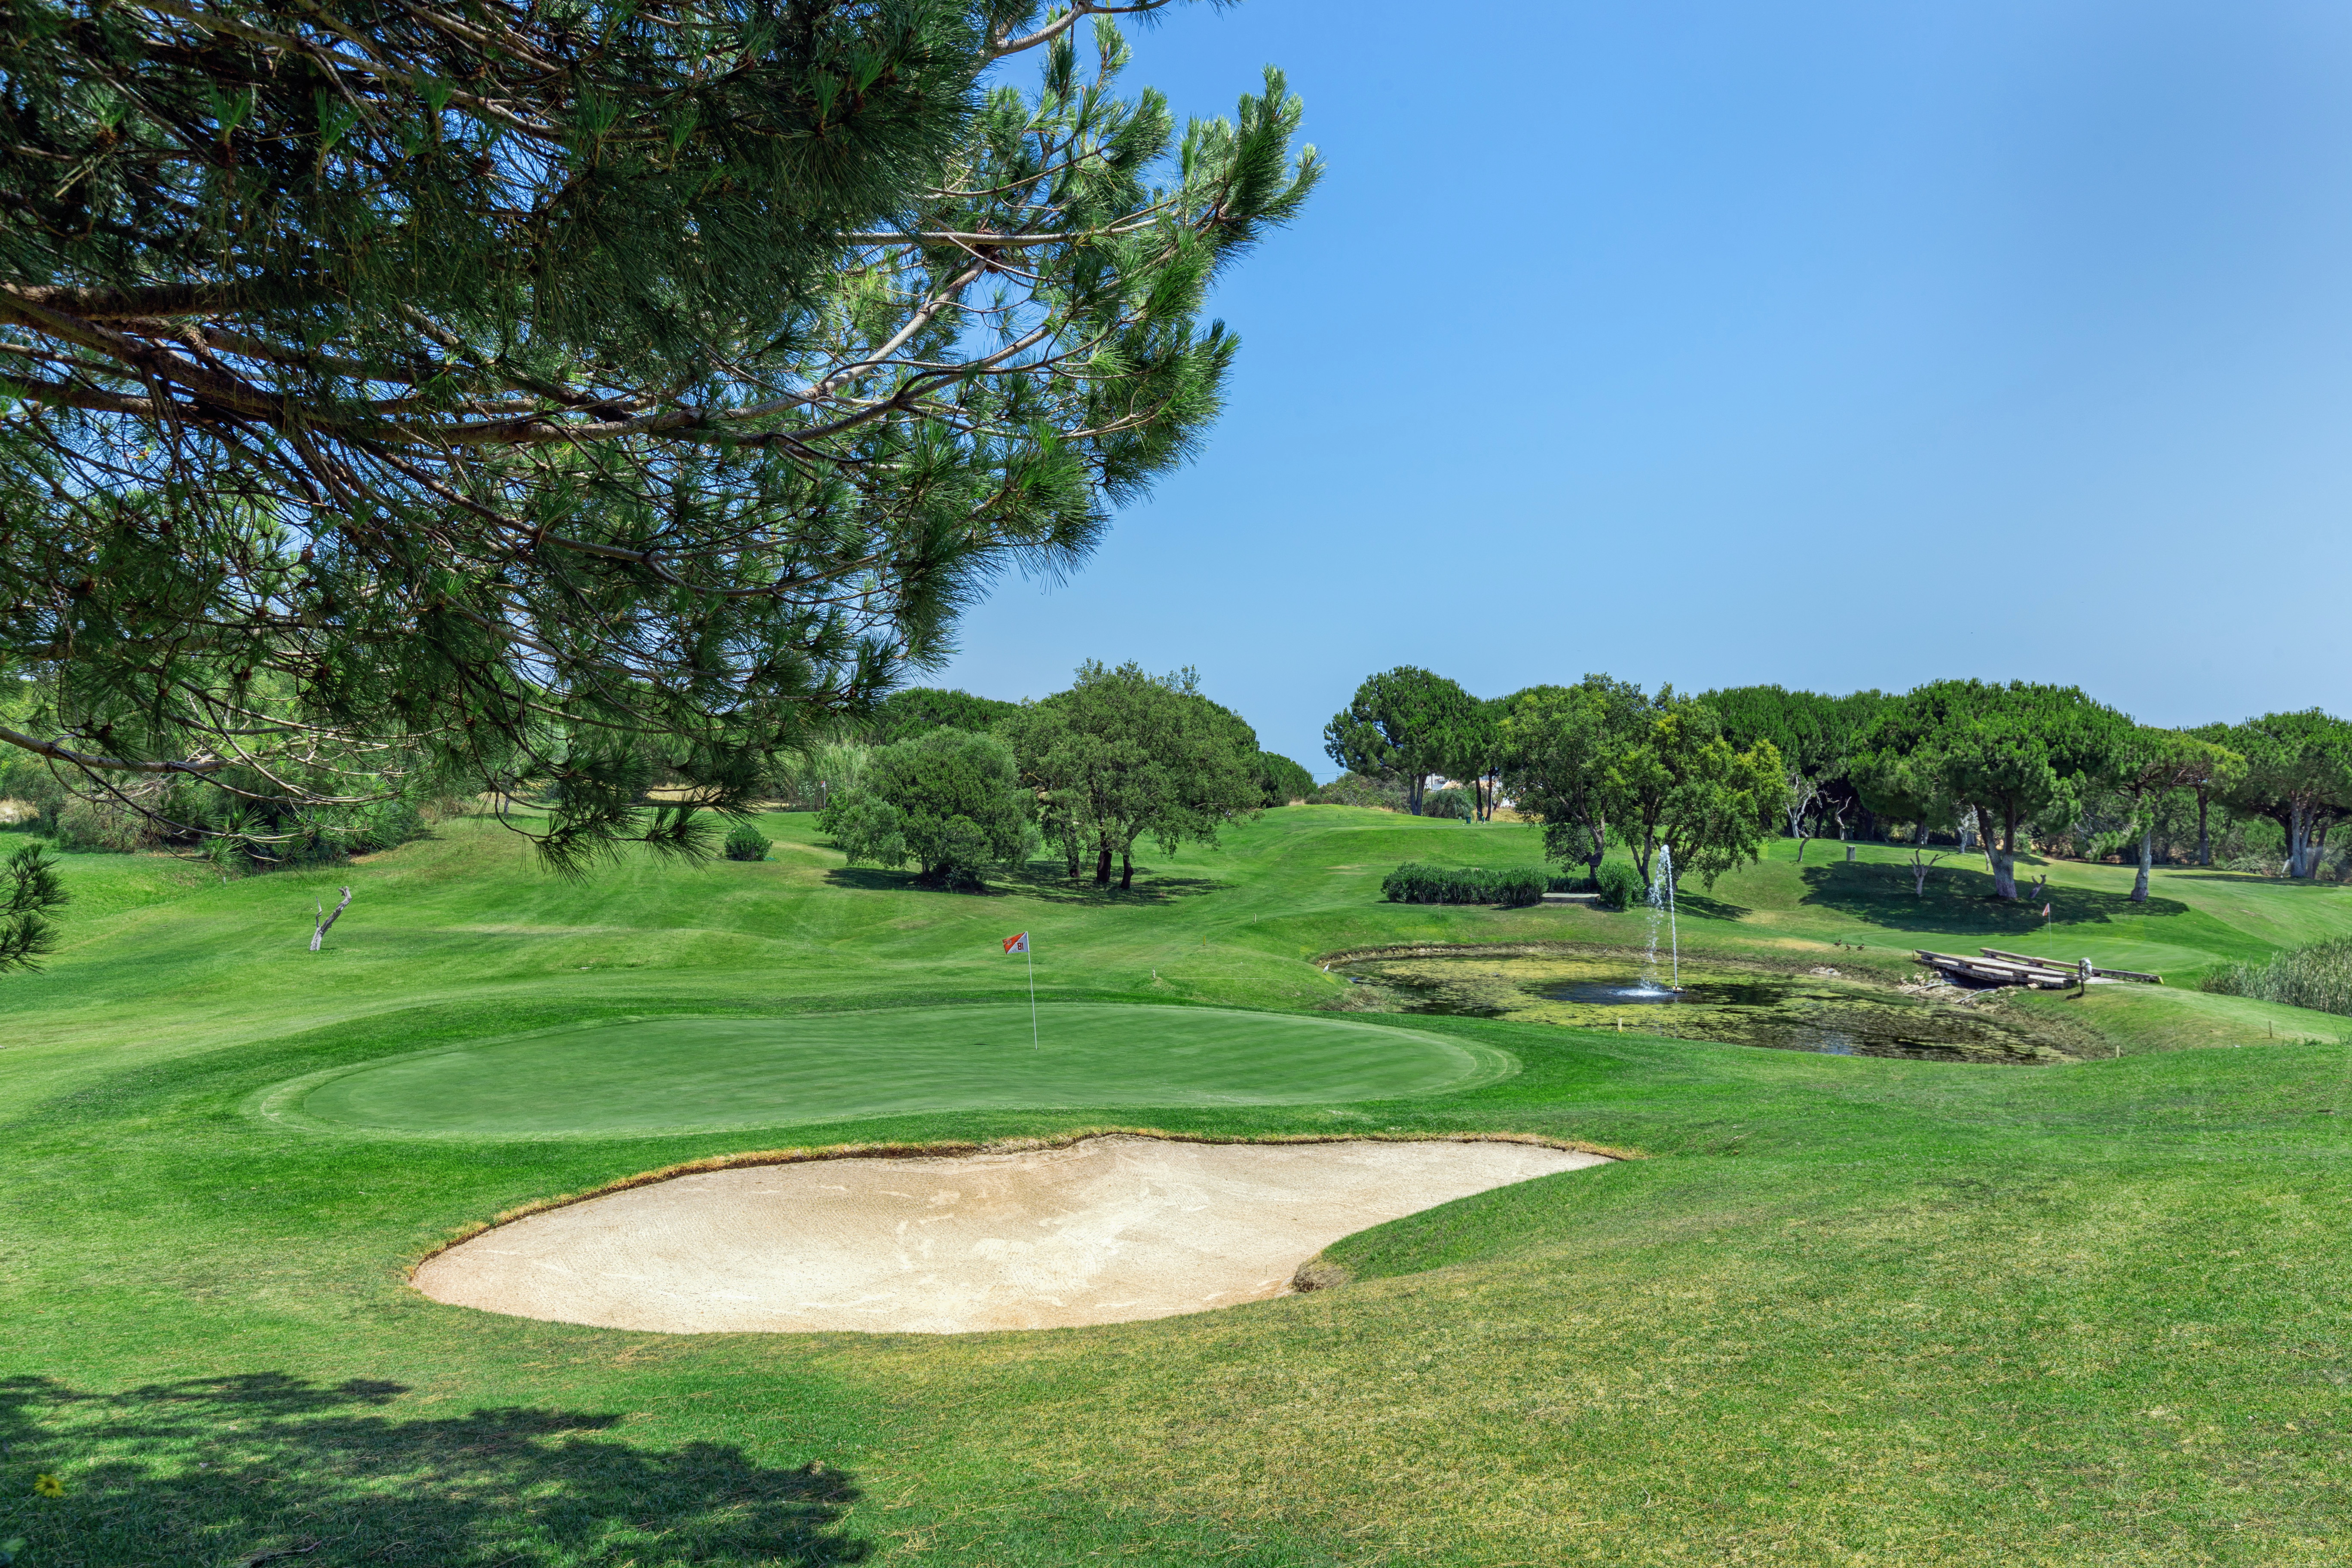 Gallery image of Balaia Golf Village Resort & Golf